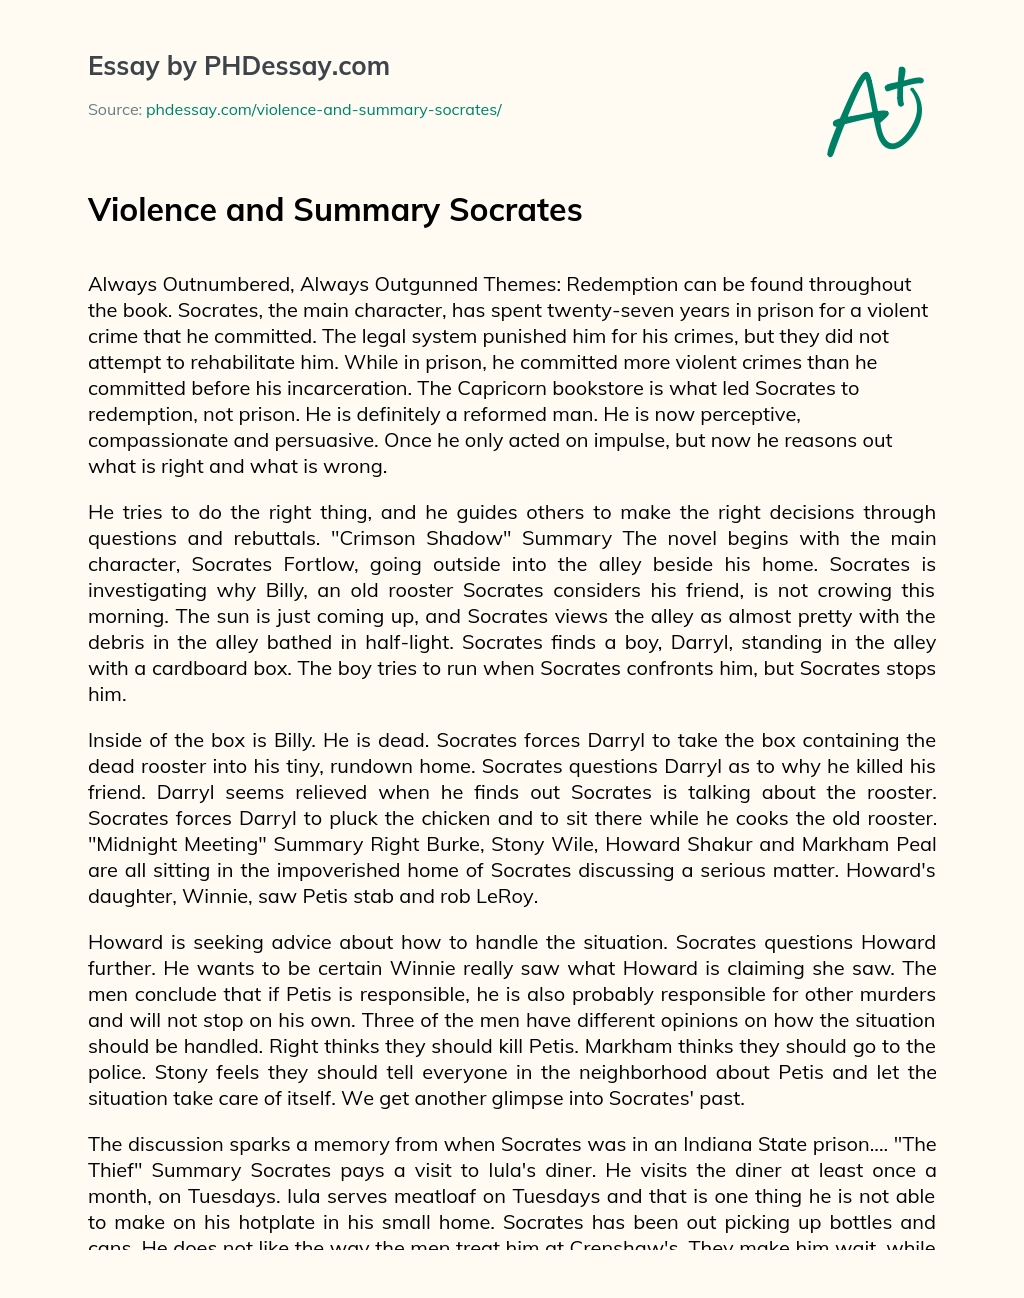 Violence and Summary Socrates essay